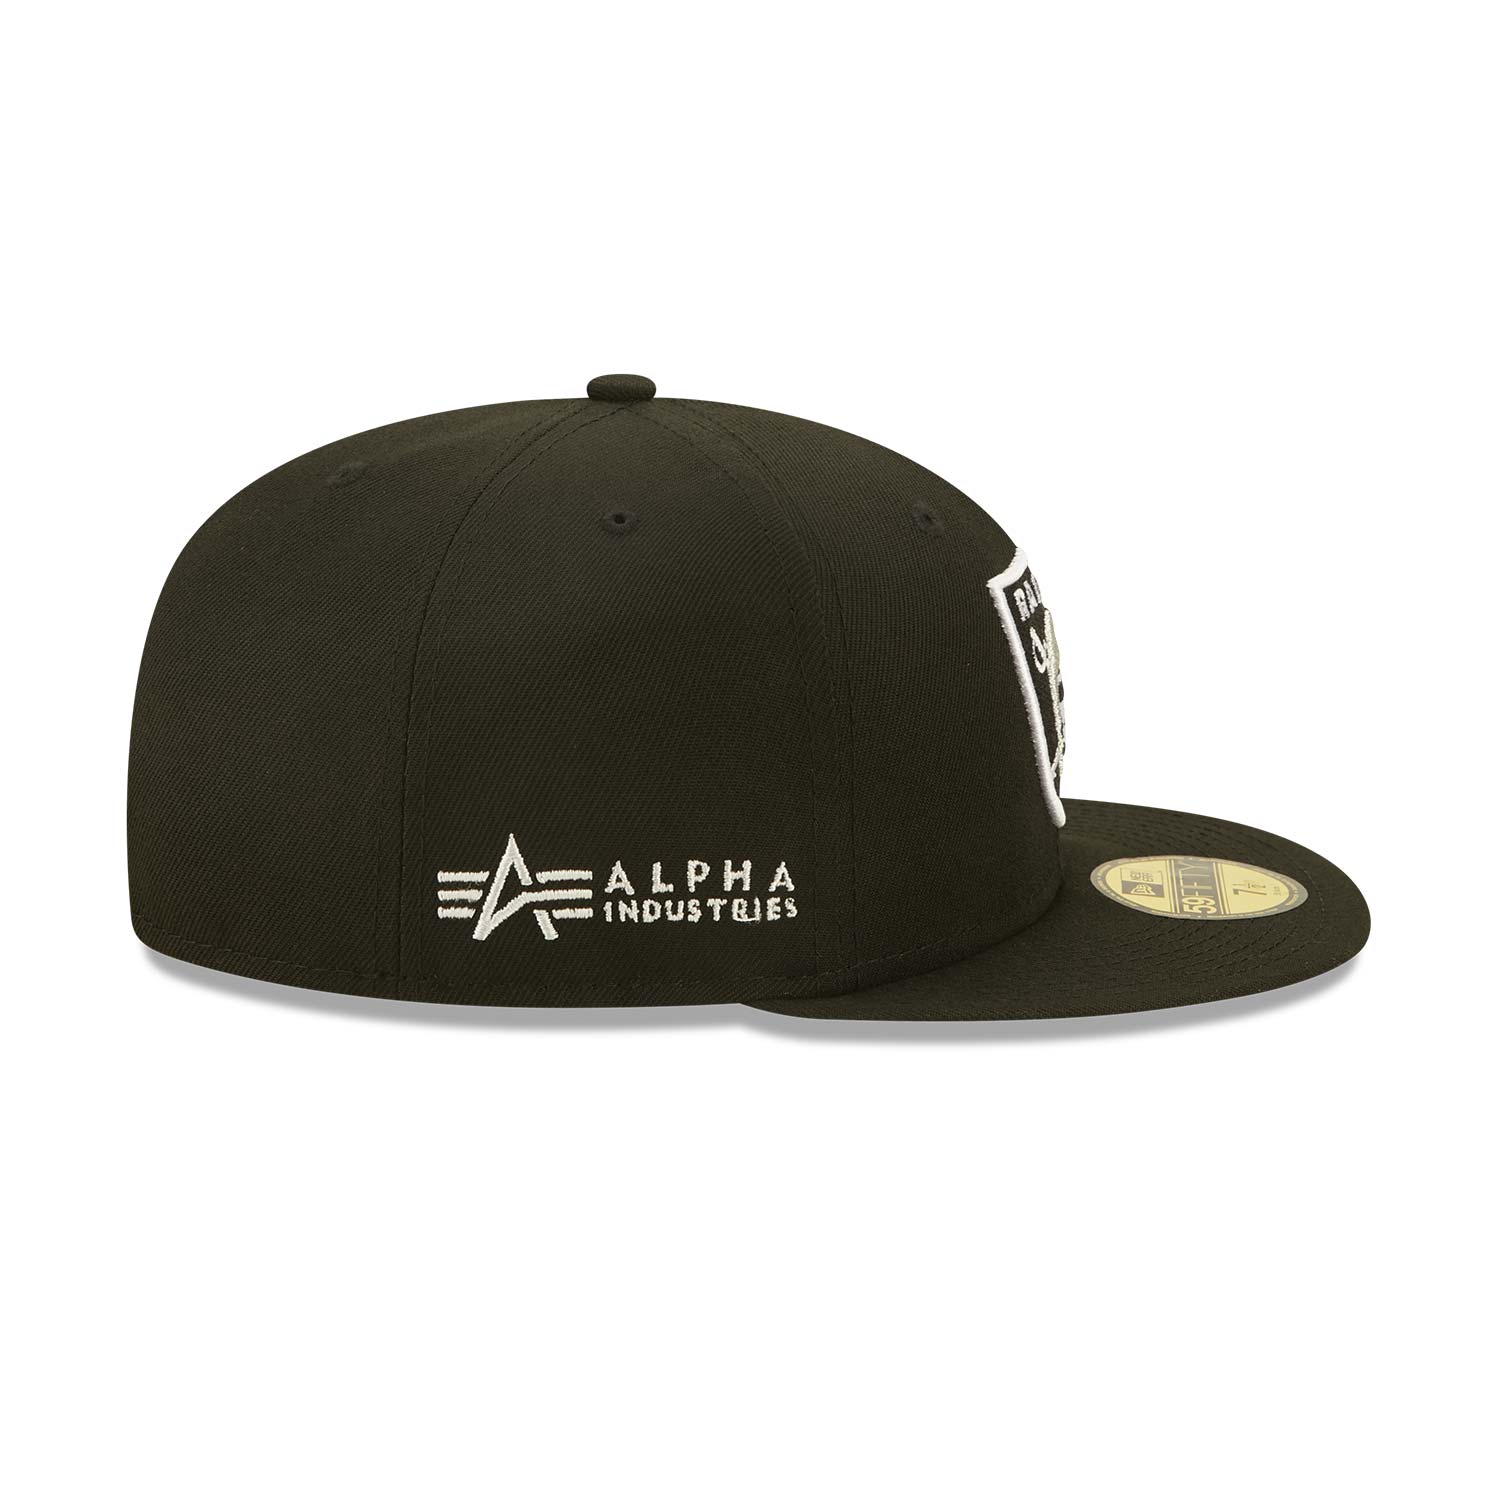 Las Vegas Raiders x Alpha Industries Black 59FIFTY Fitted Cap